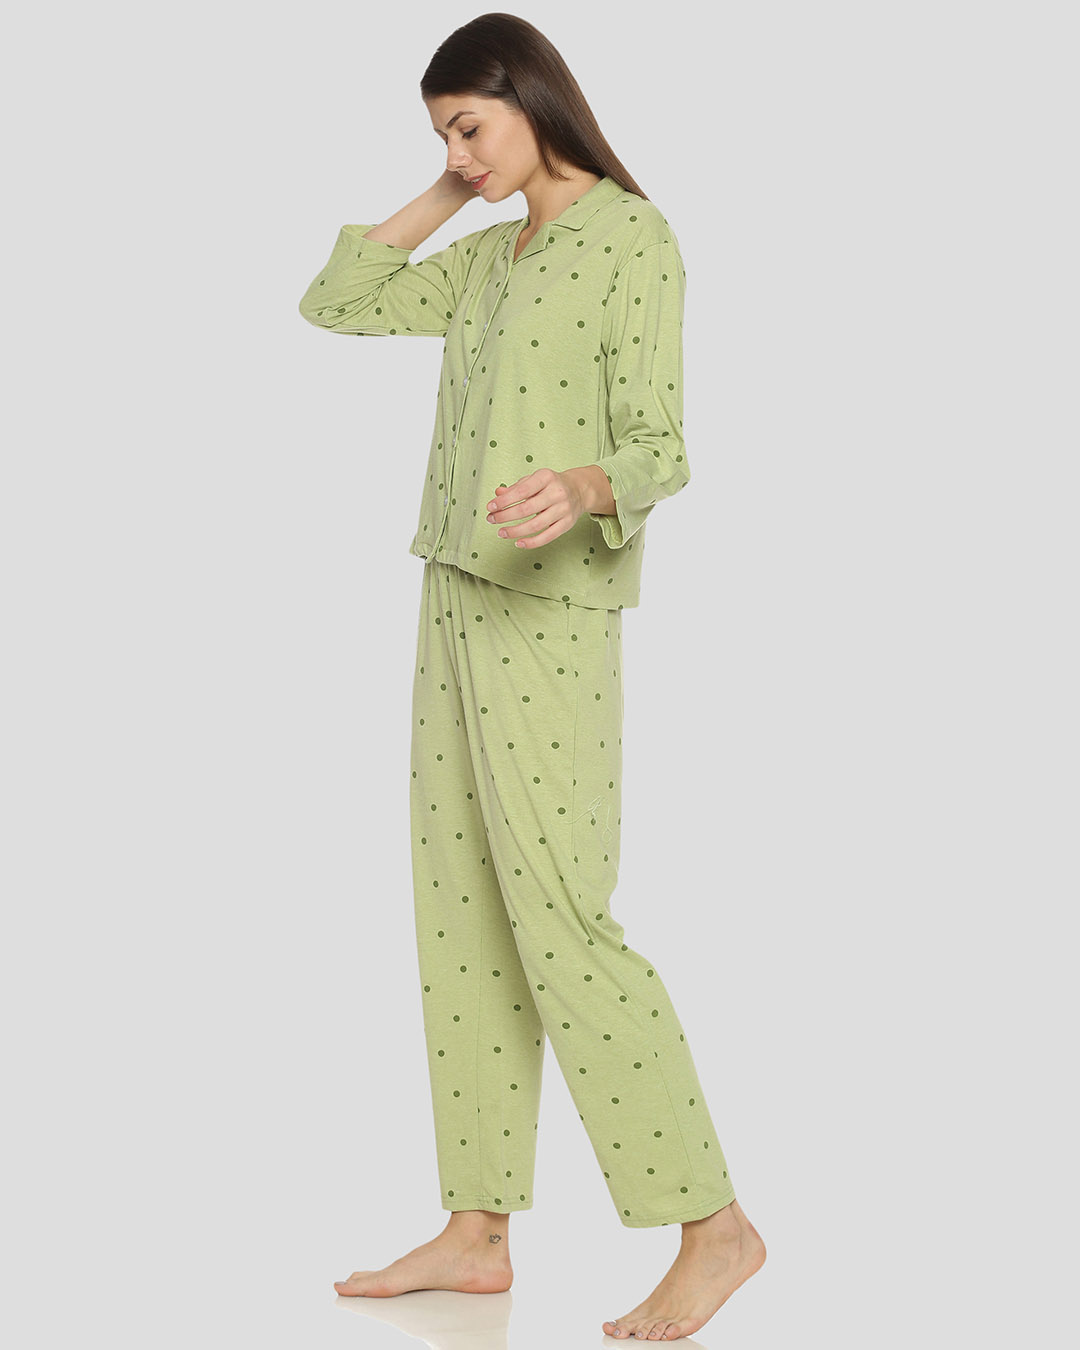 Shop Women's Light Green Printed Stylish Night Suit-Back